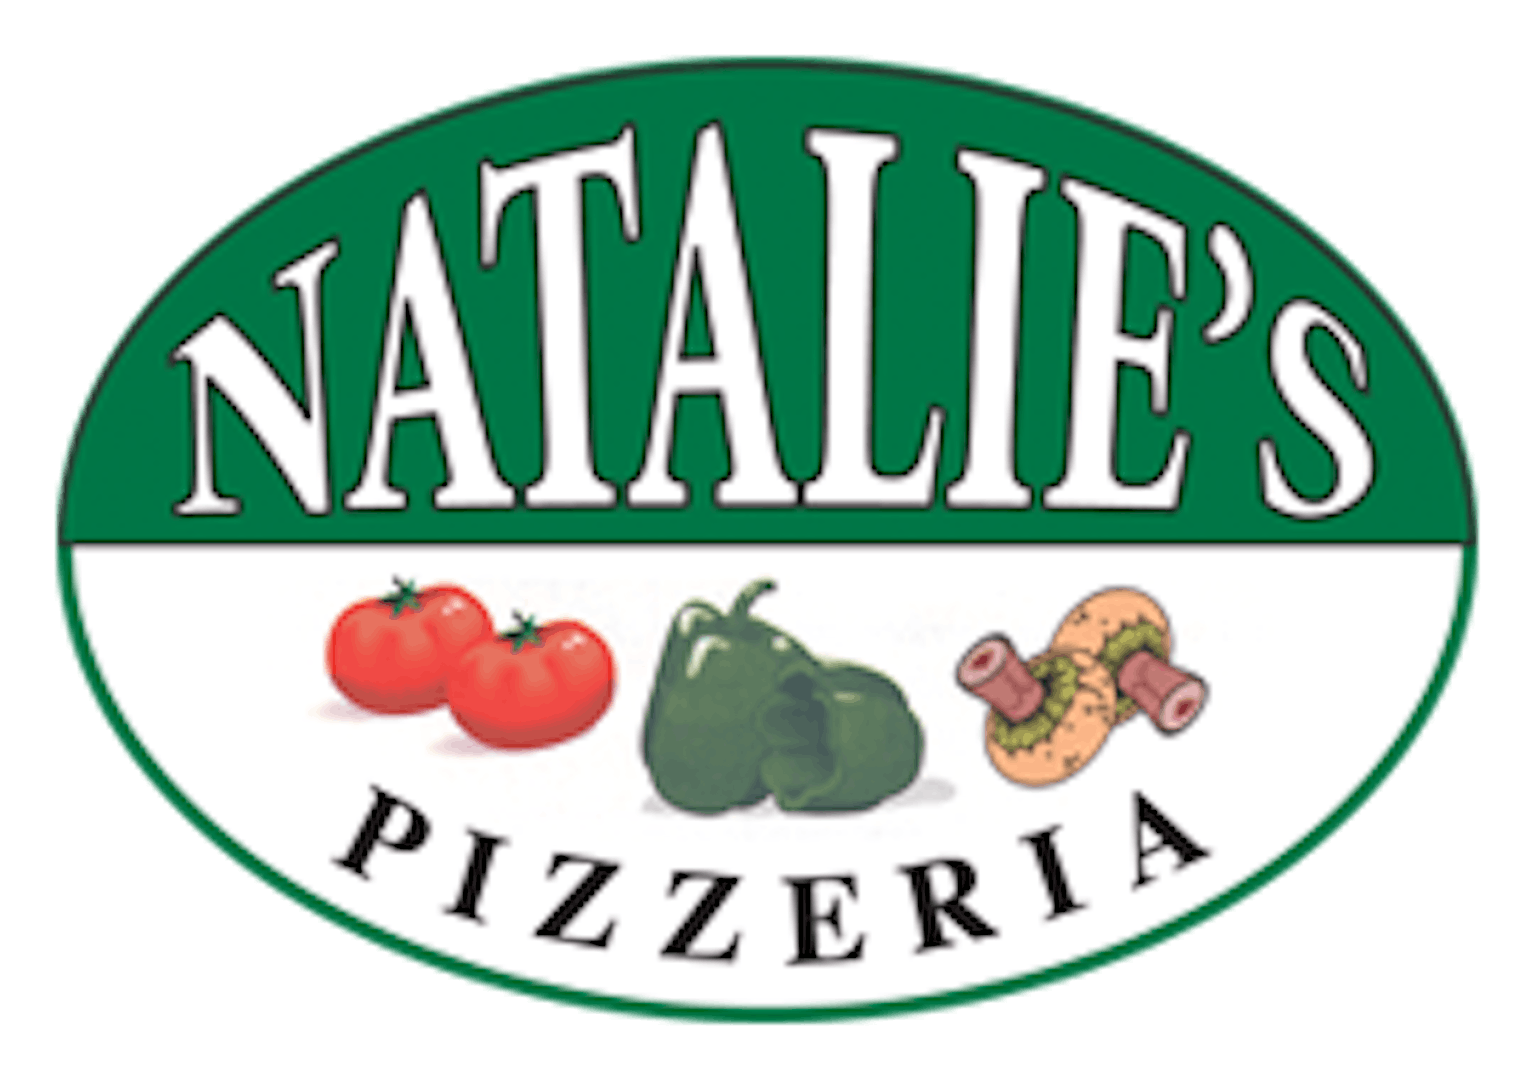 Natalie's Pizzeria